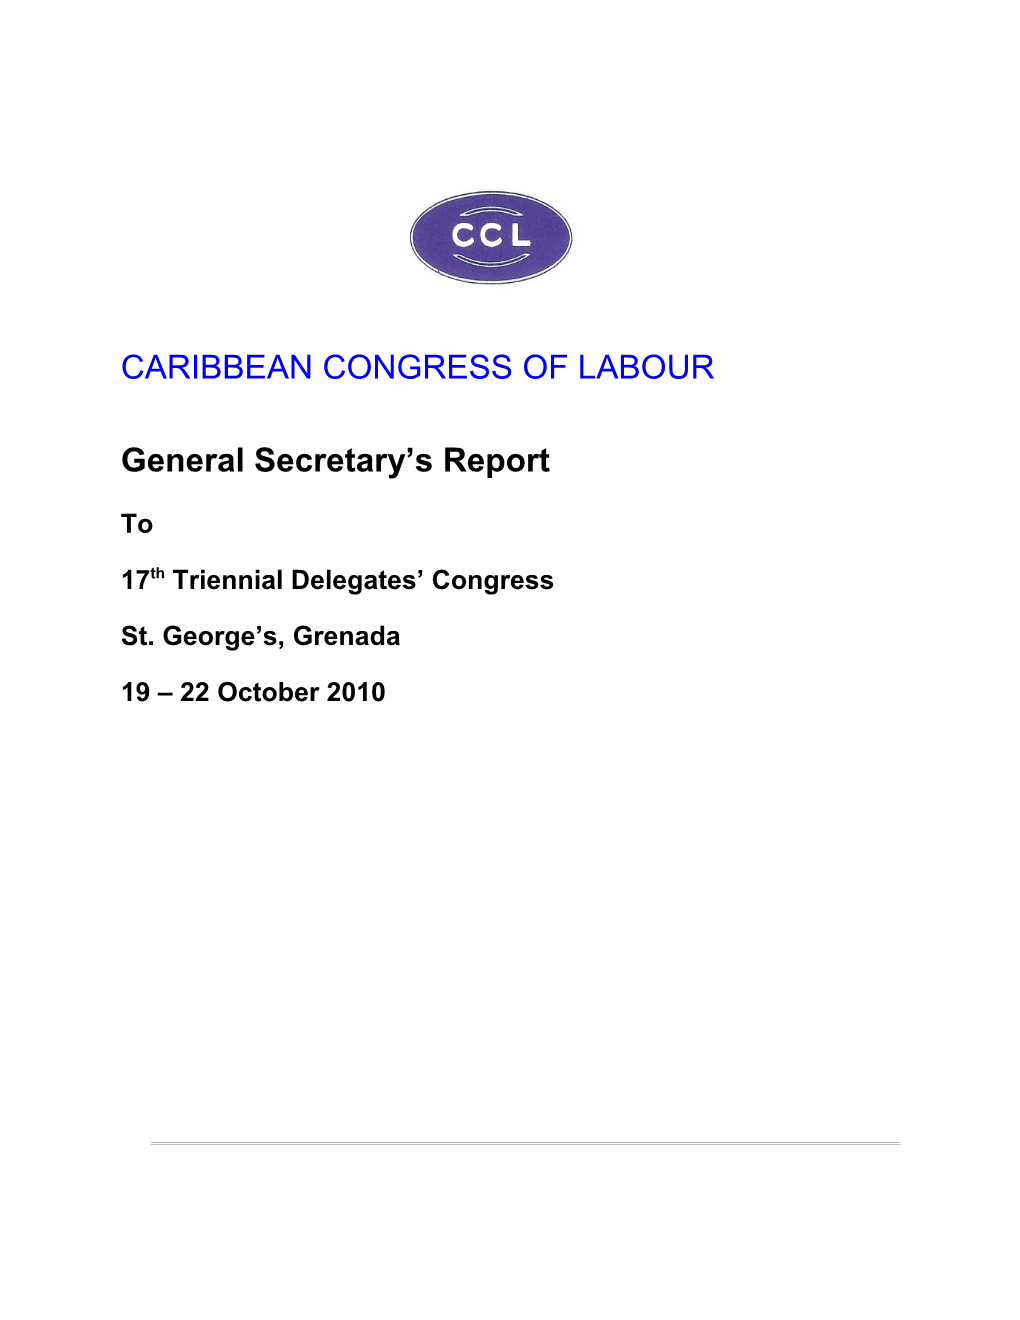 General Secretary S Report